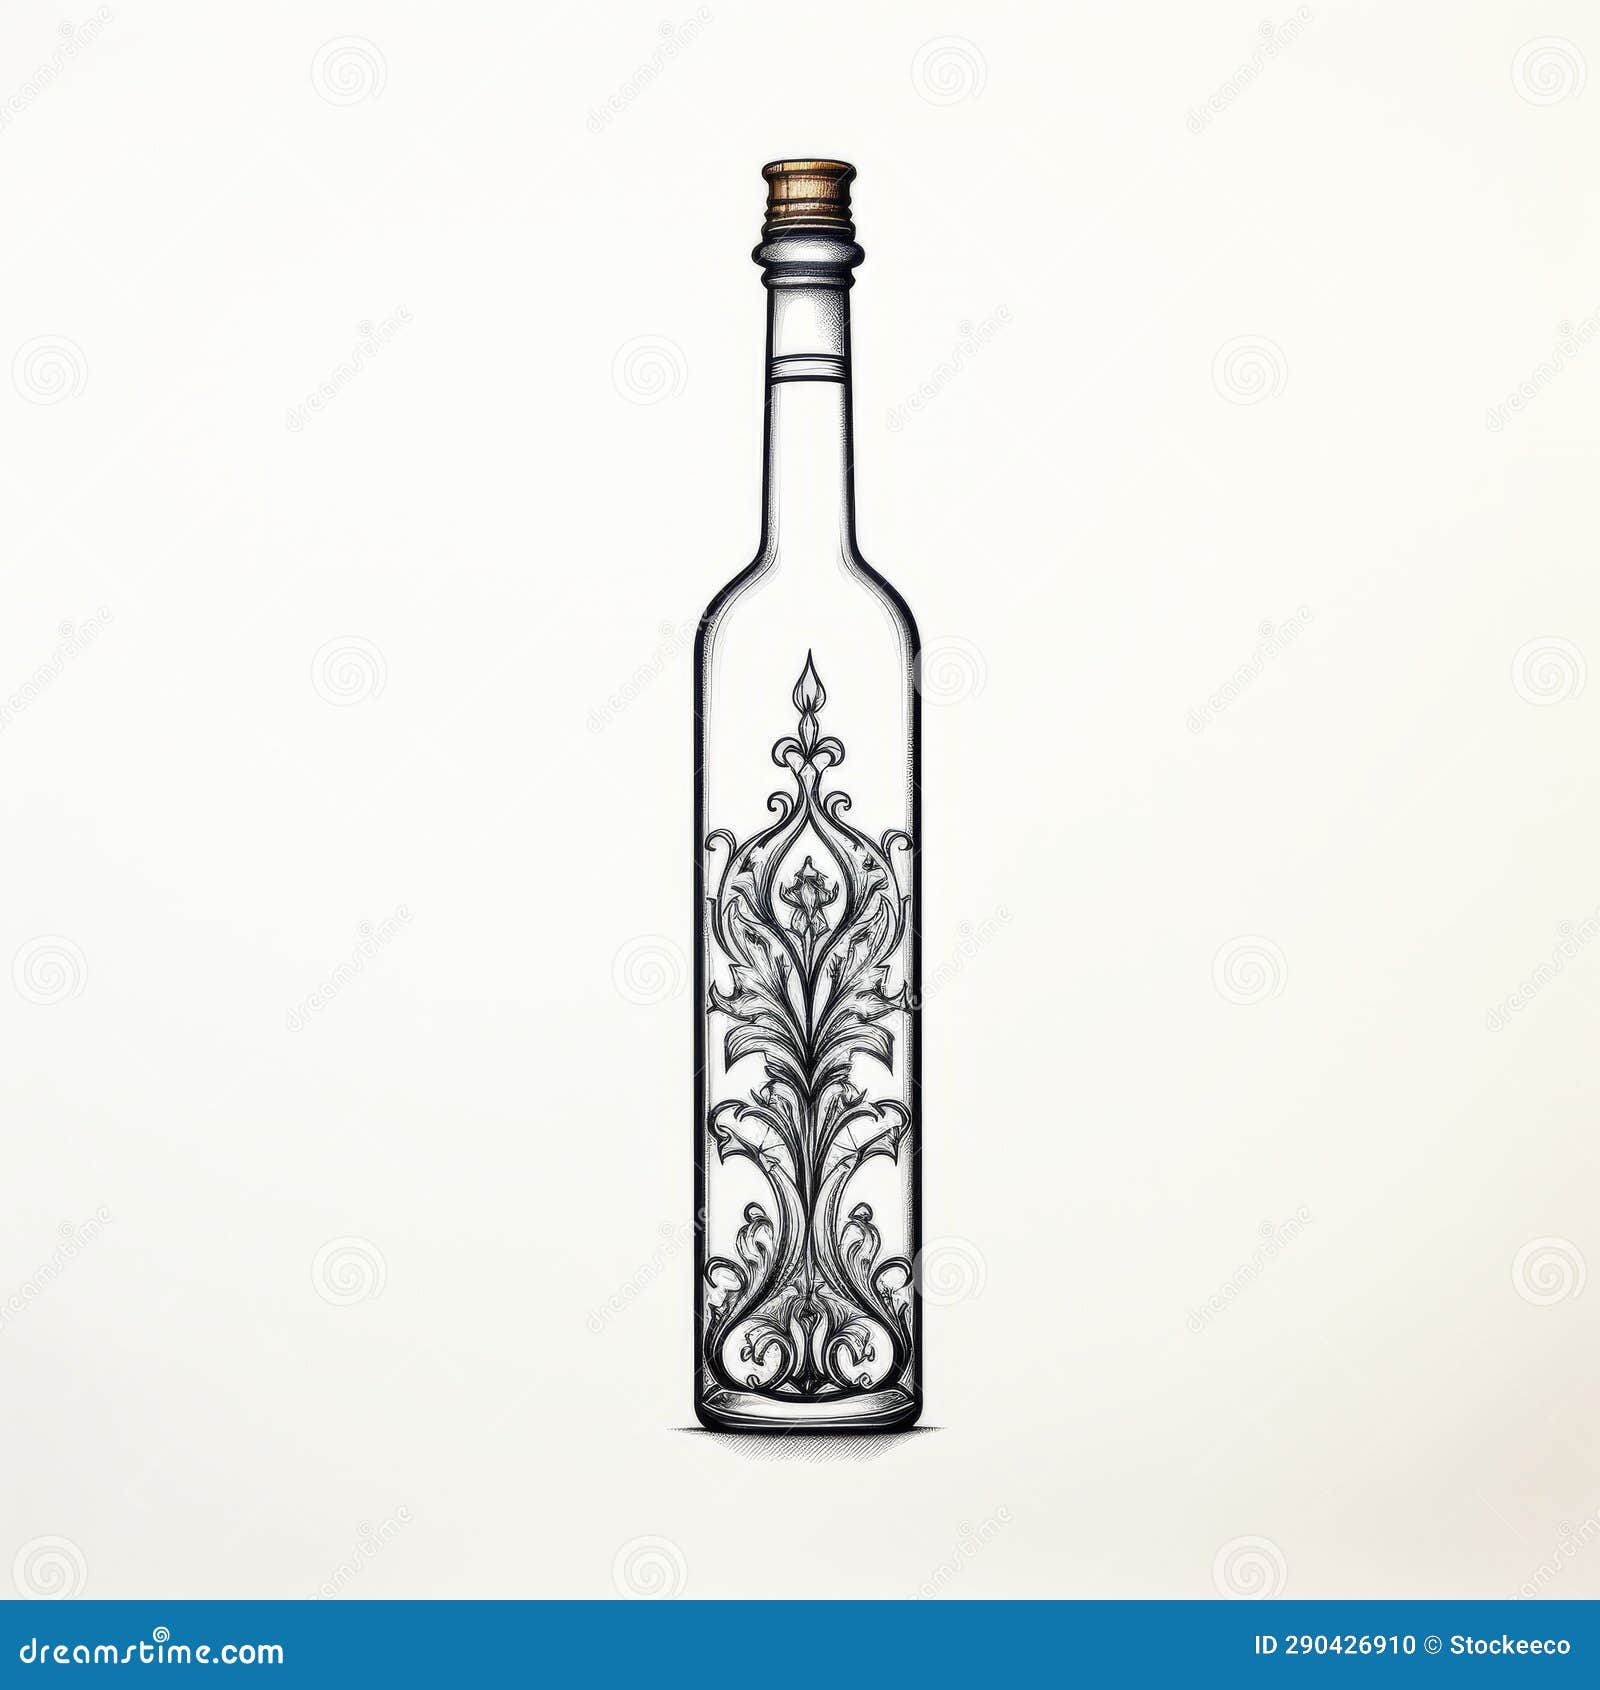 elegant bottle  with intricate pen illustrator style